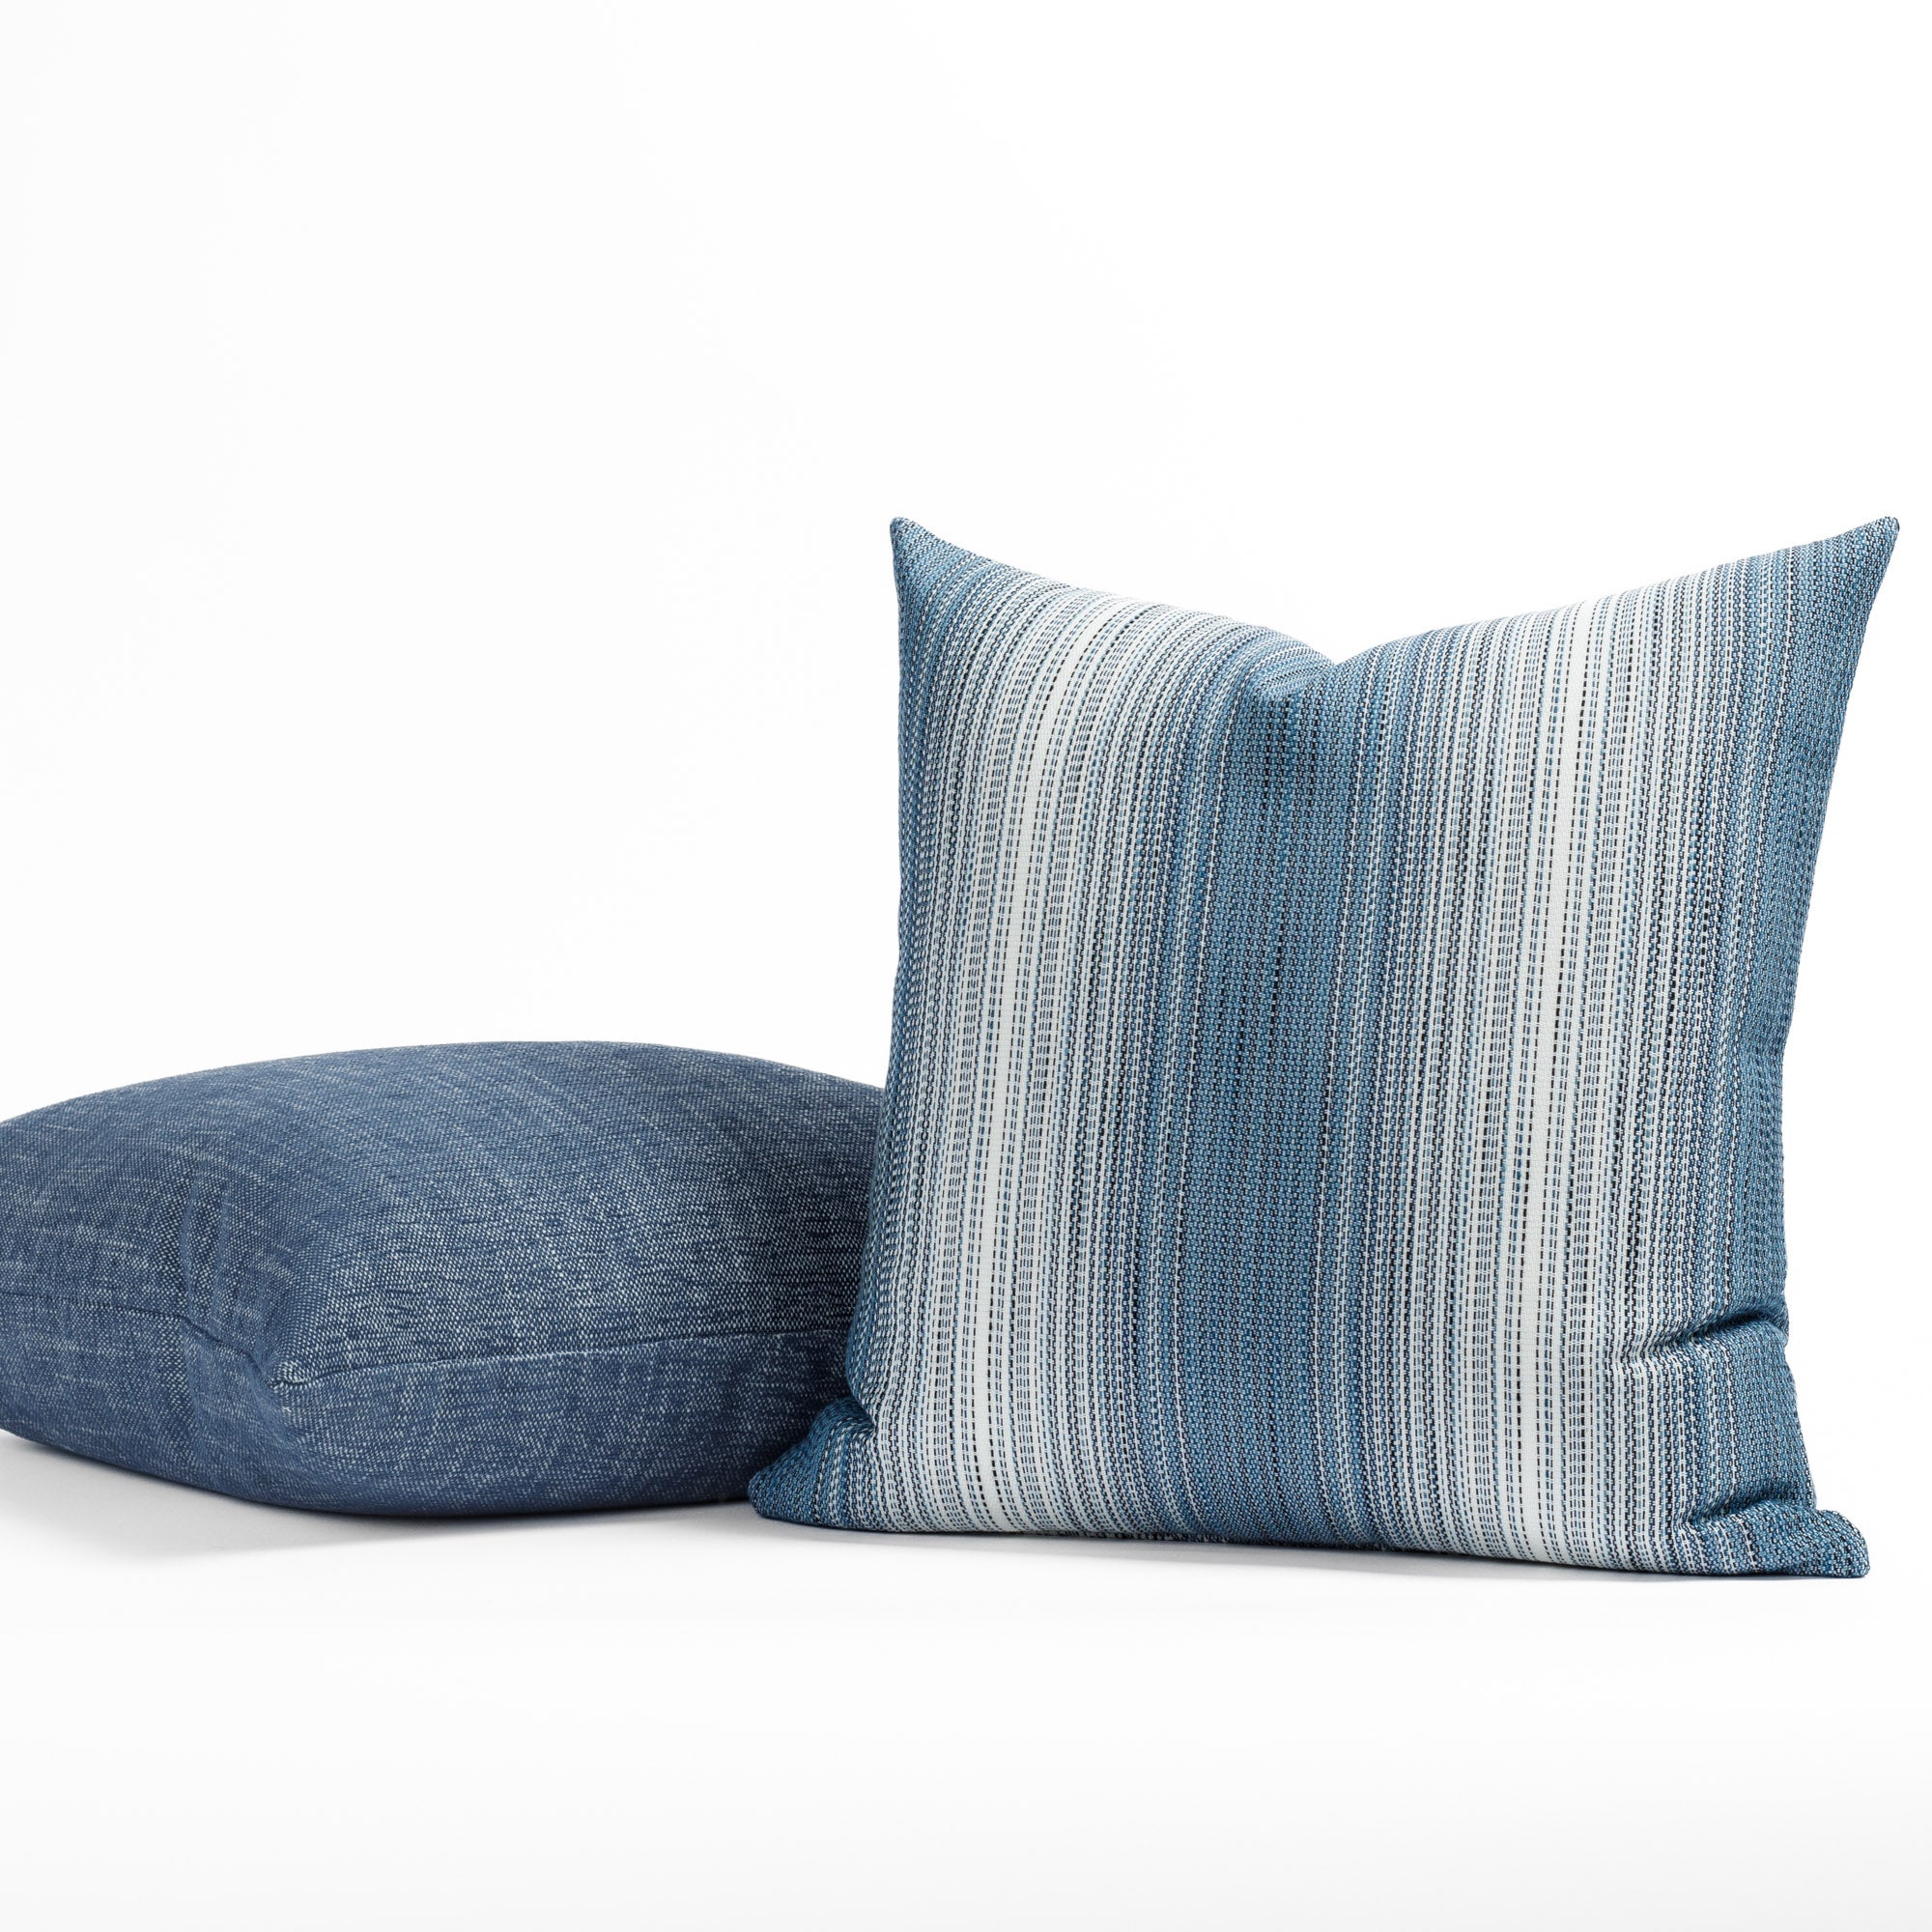 Tonic Living indigo blue and white pillows : Mateo Stripe and Parker Indigo throw pillows